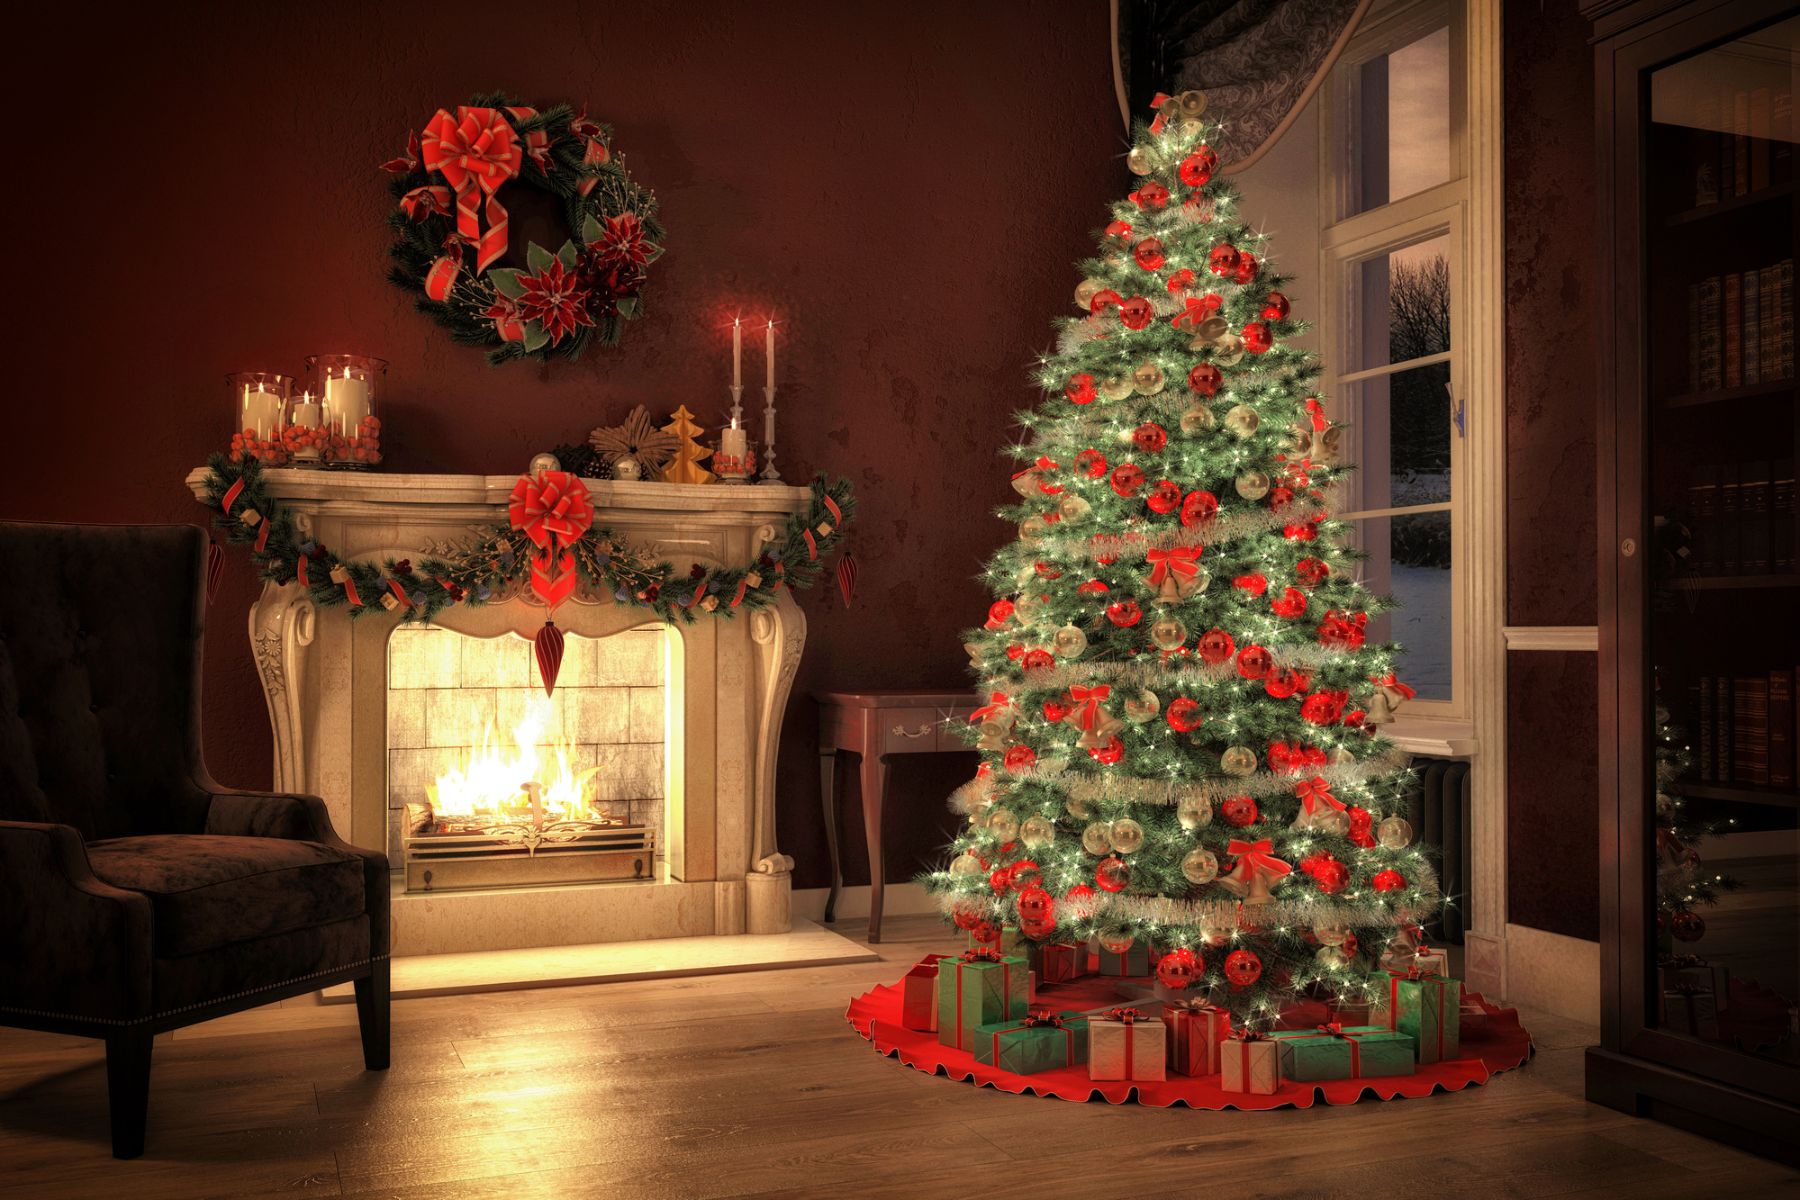 Christmas tree near a fireplace with a wreath